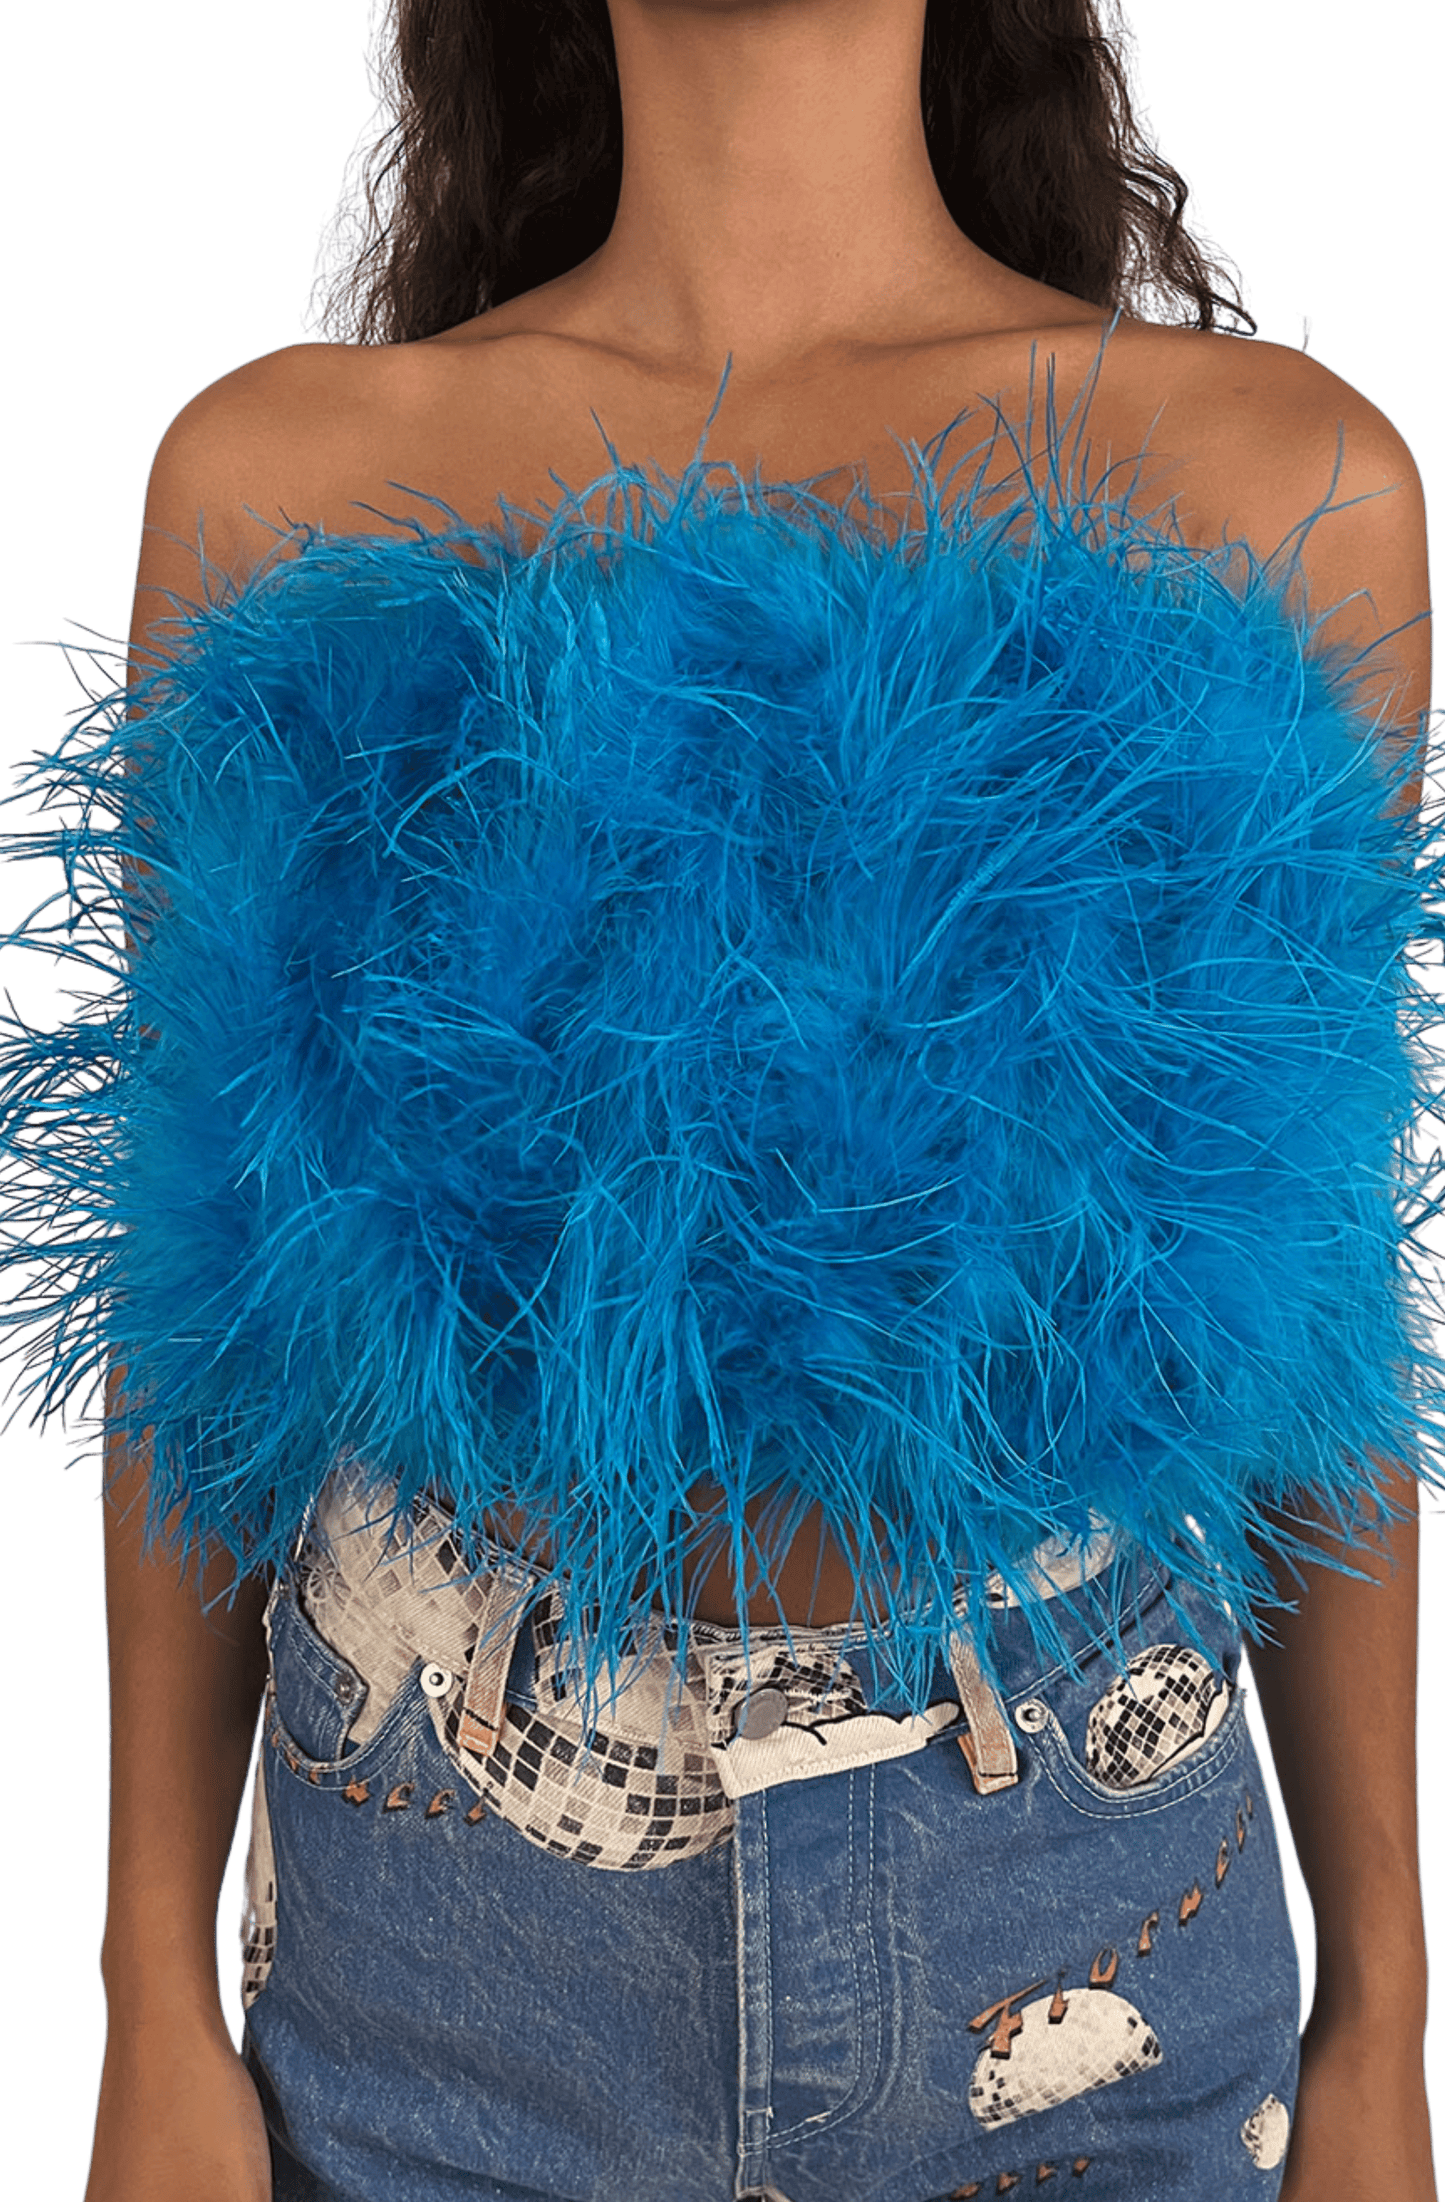 Twenty Fall Blue Feather Top/Skirt Size UK 8-10